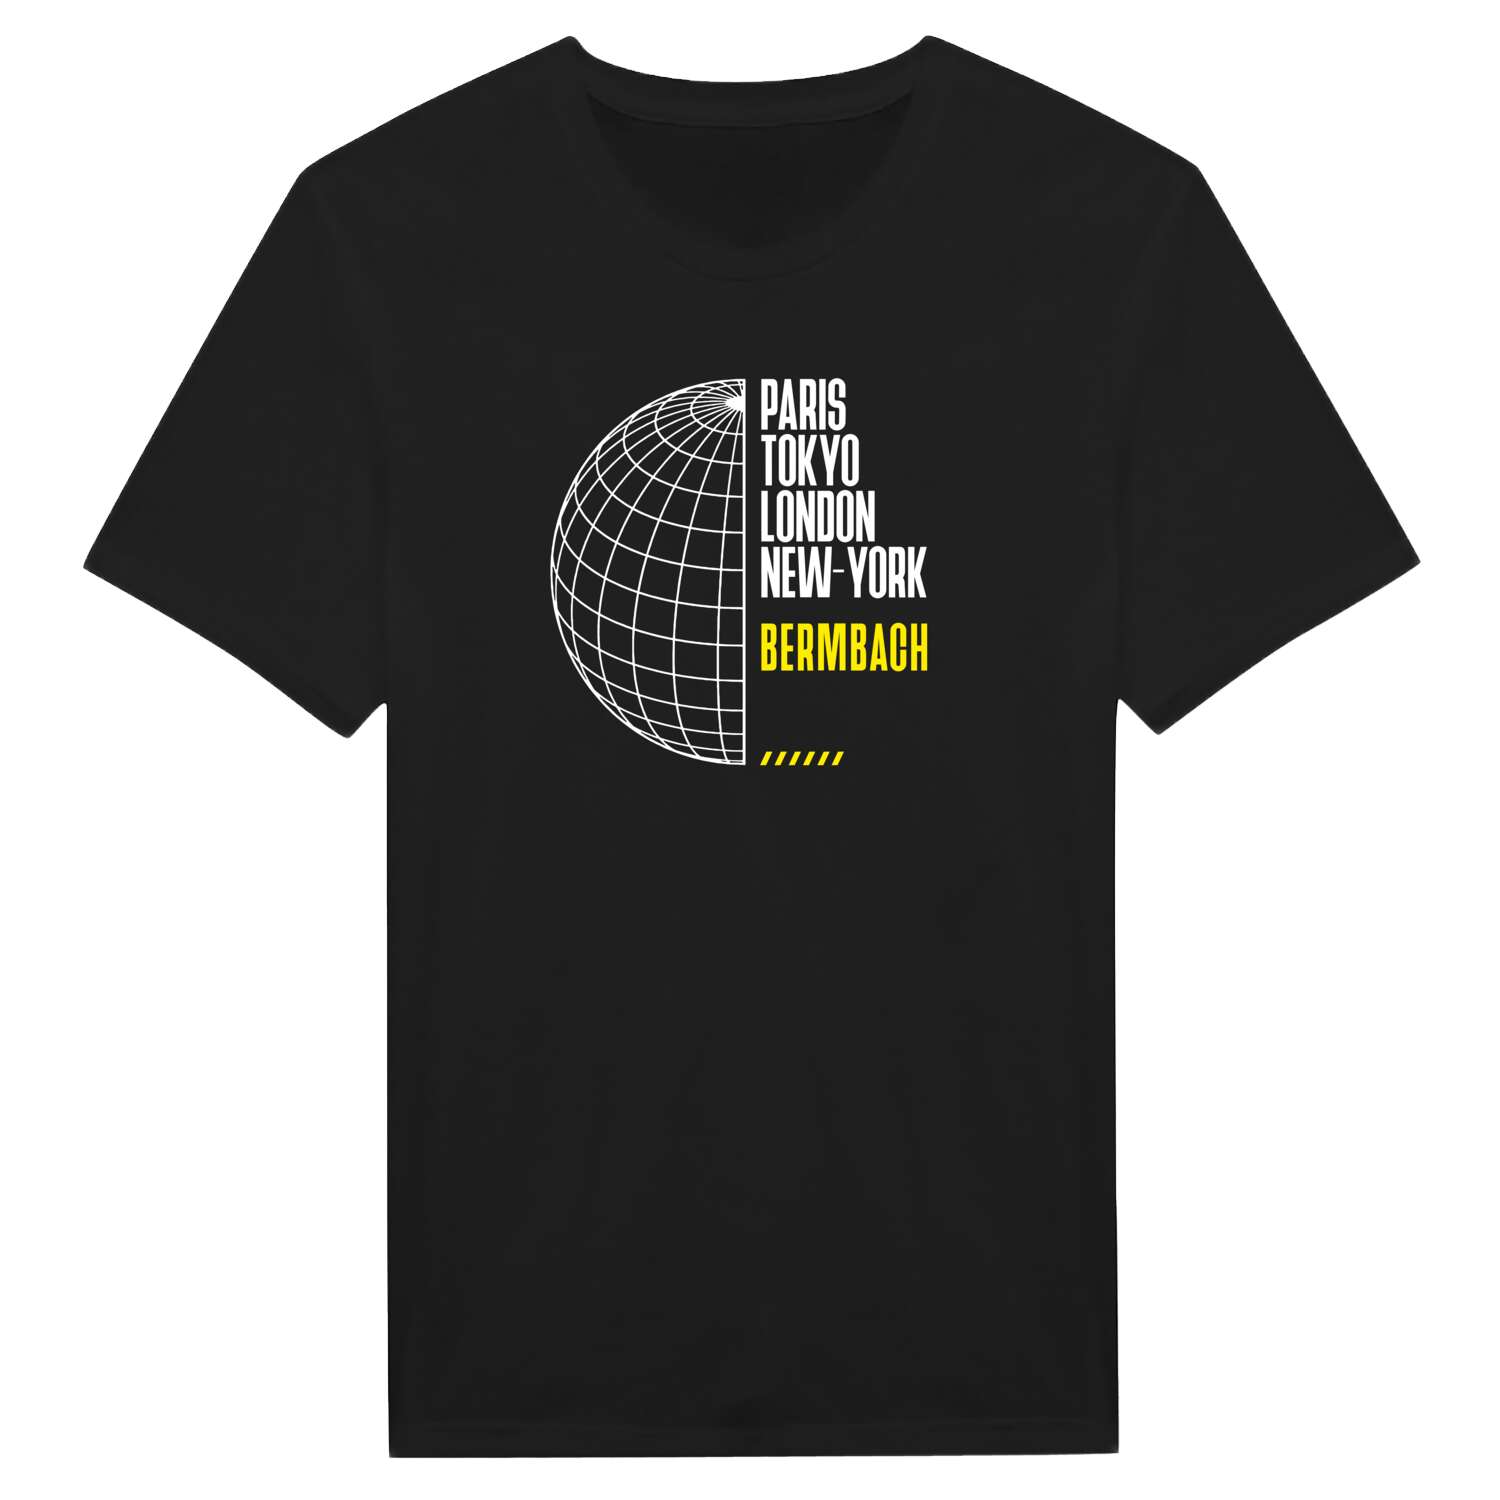 Bermbach T-Shirt »Paris Tokyo London«